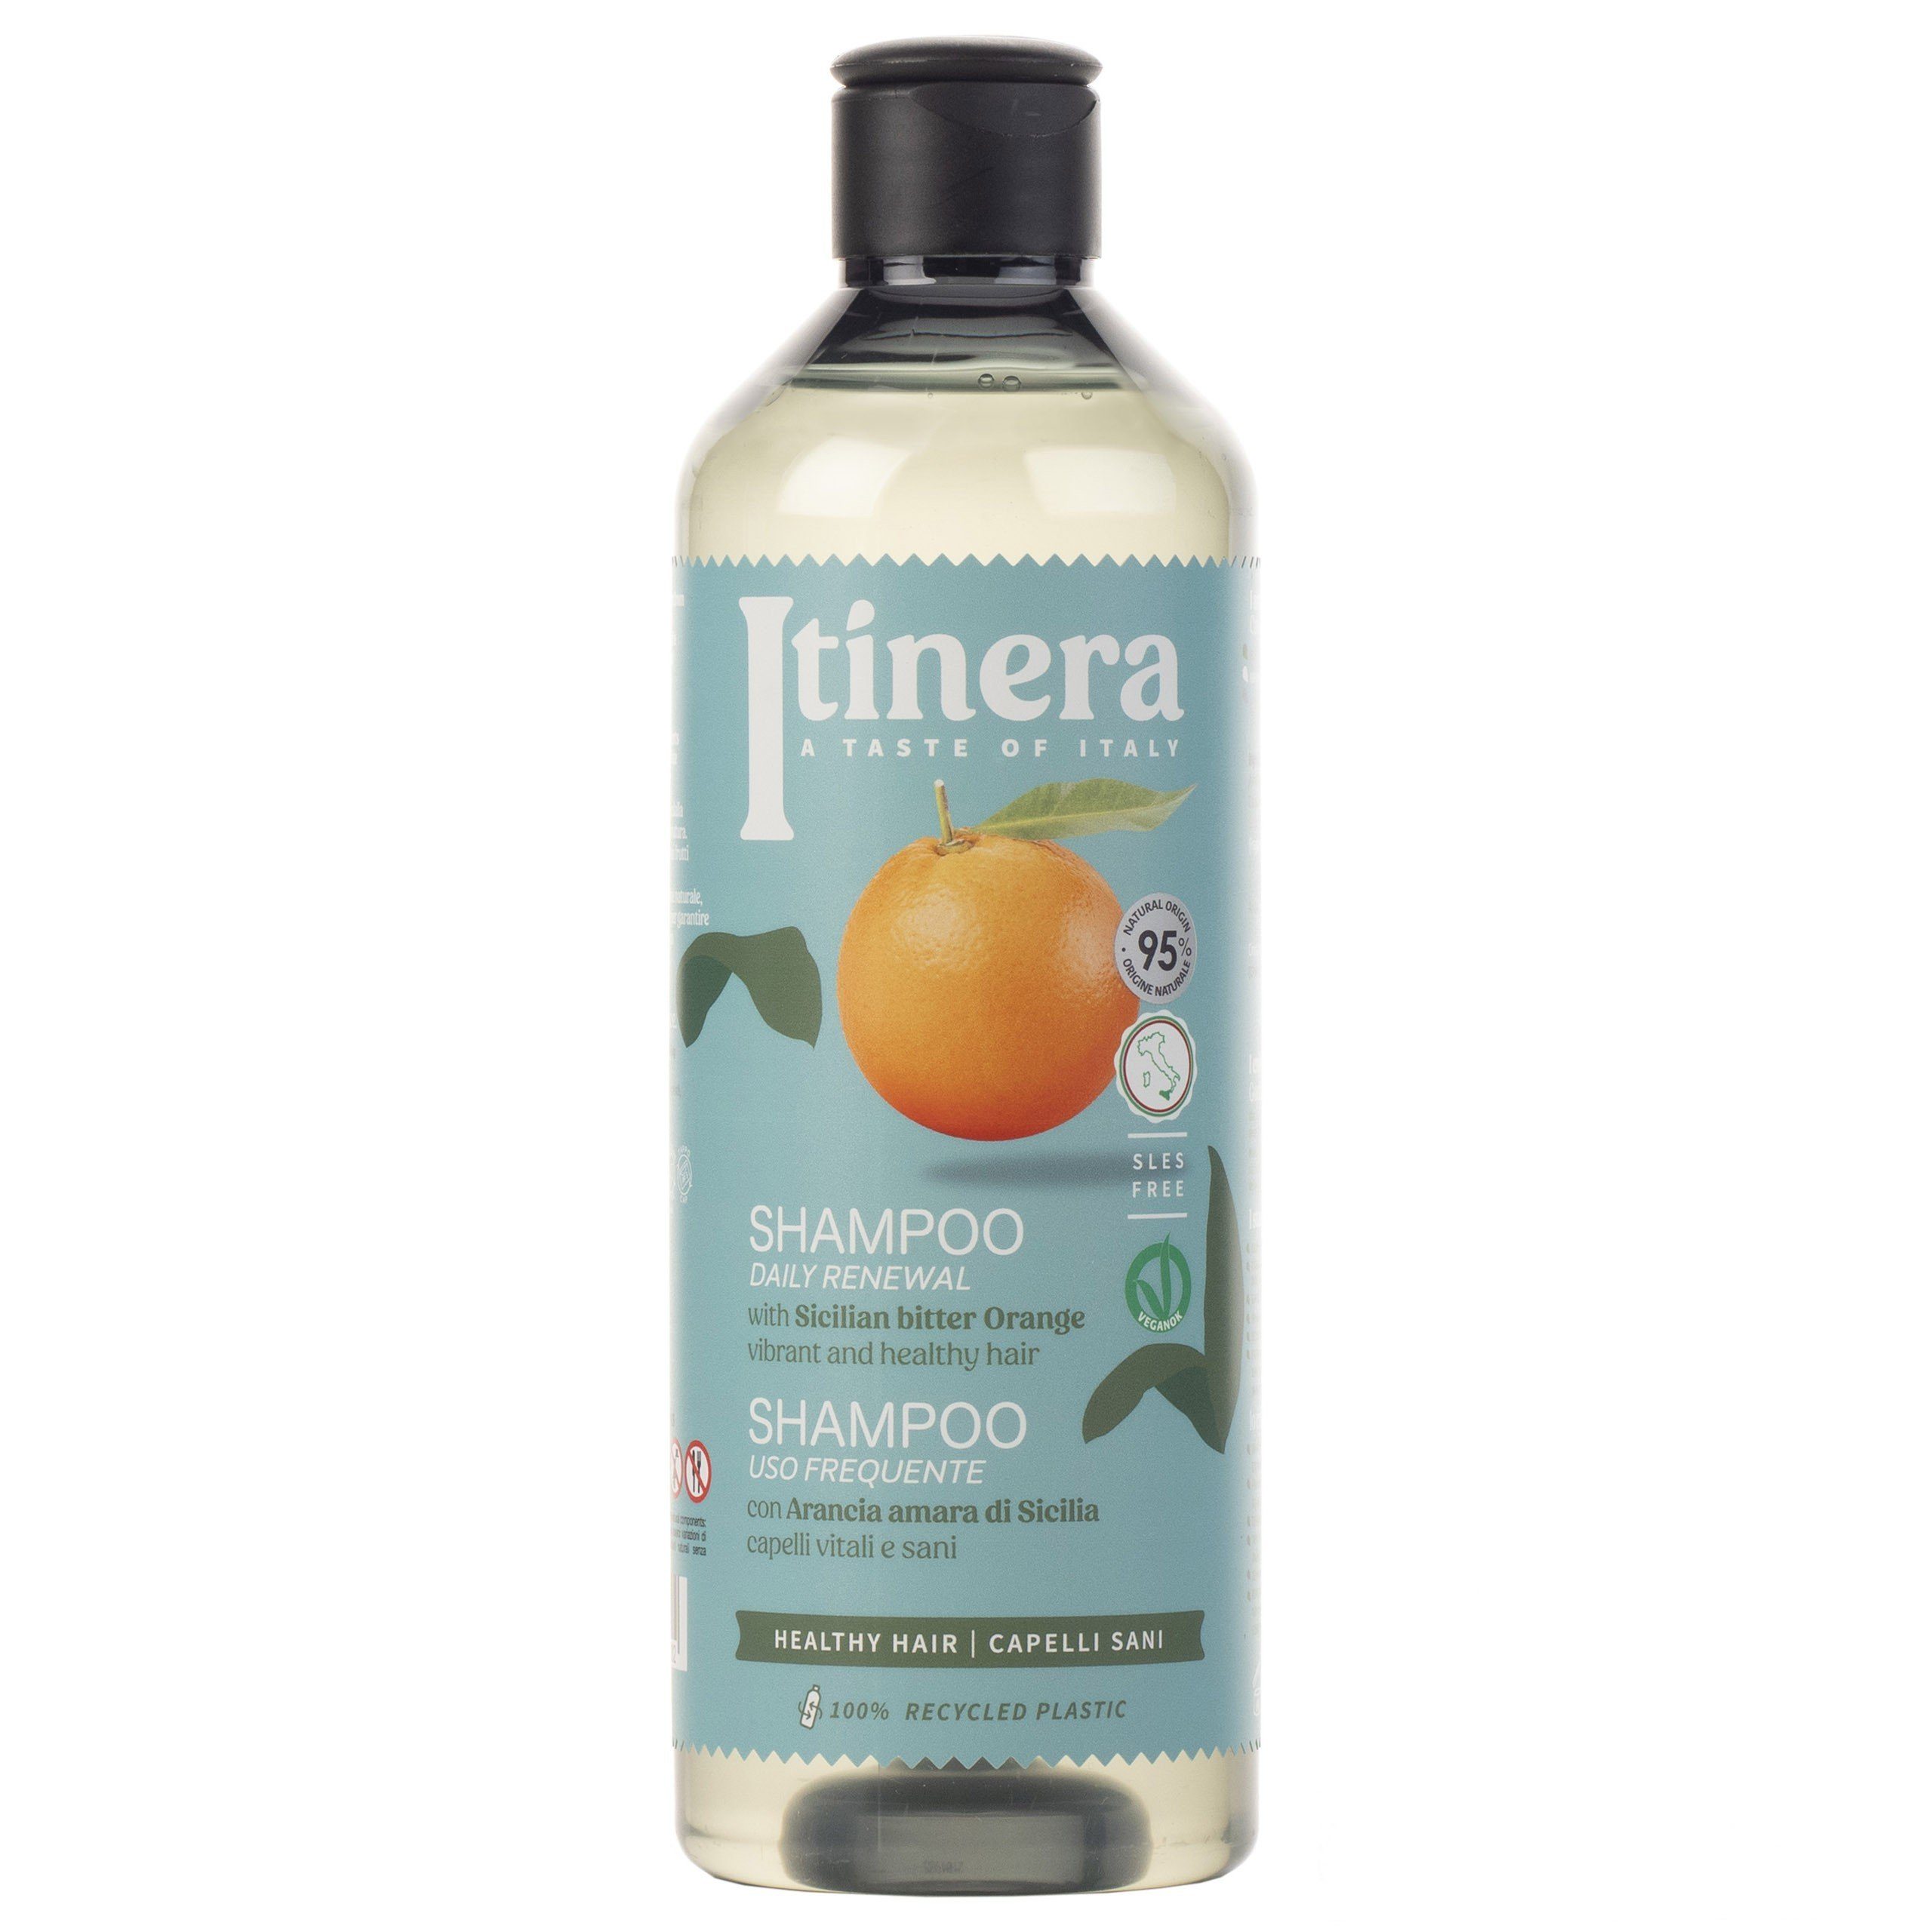 Haarpflege-Set ITINERA + Shampoo Sarcia.eu Bitterorange Shampoo Zitrone Geschenkset: 2x370ml